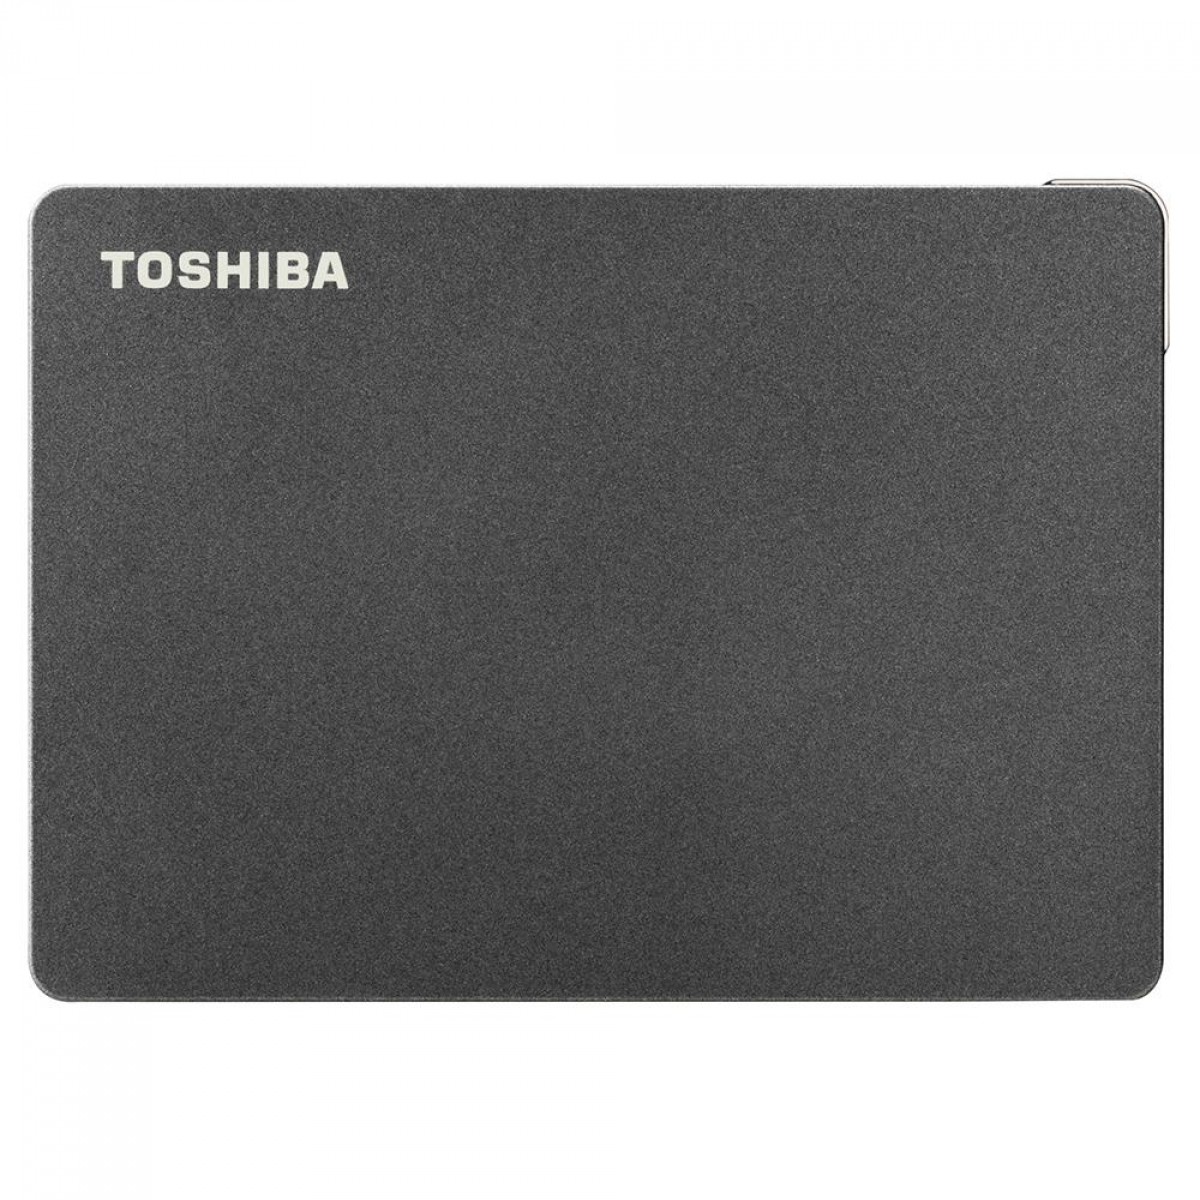 HD Externo Toshiba Canvio Gaming 1TB, USB 3.0, Até 5Gb/s, HDTX120XK3AA